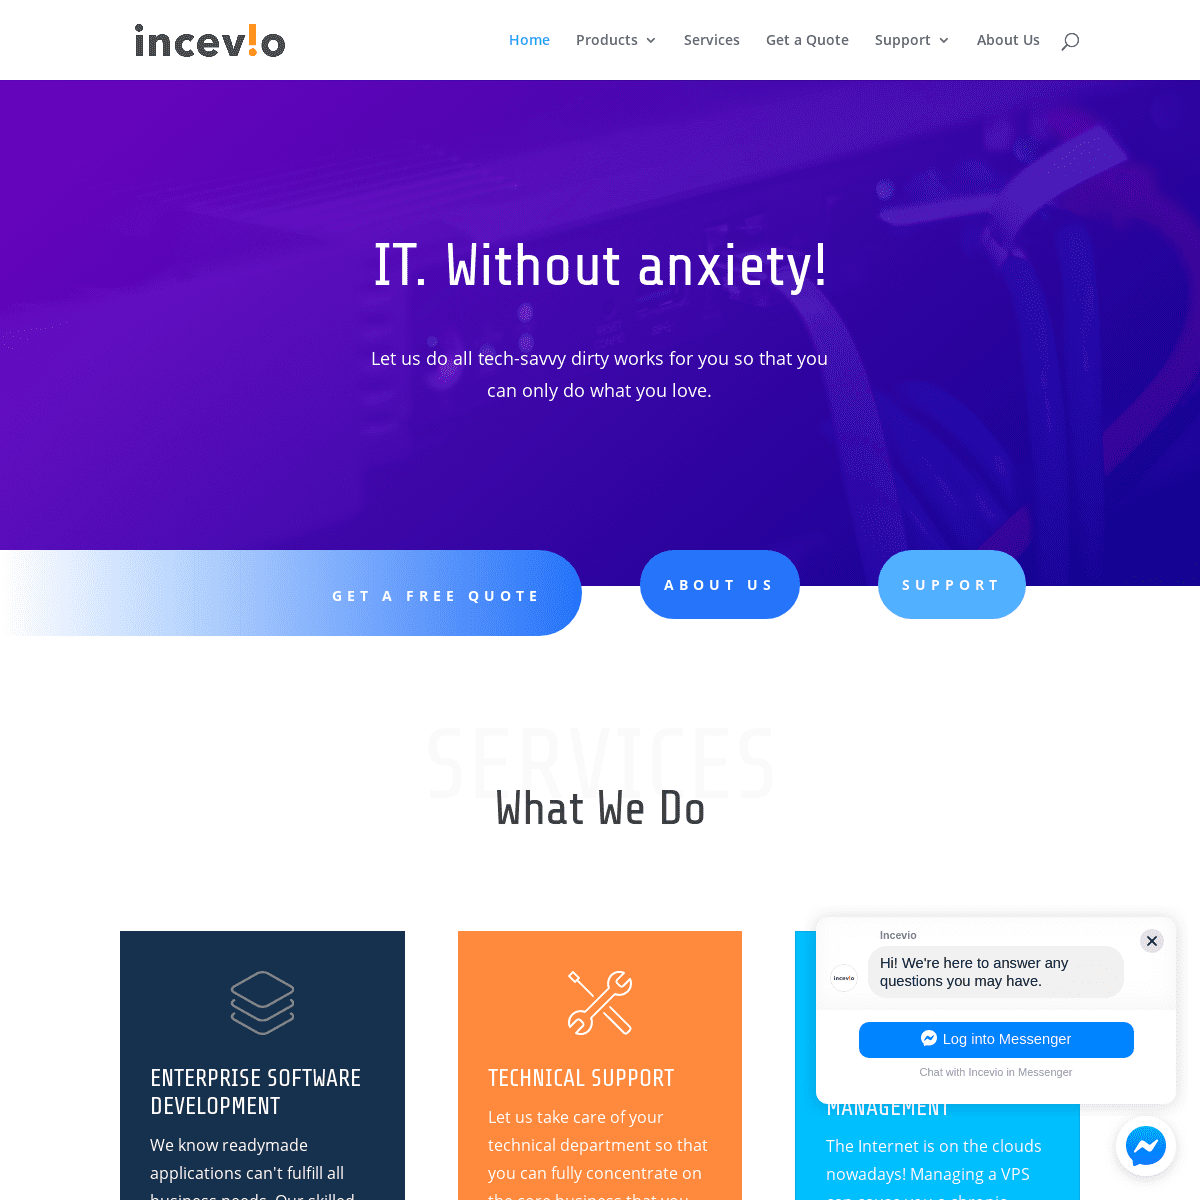 A complete backup of incevio.com